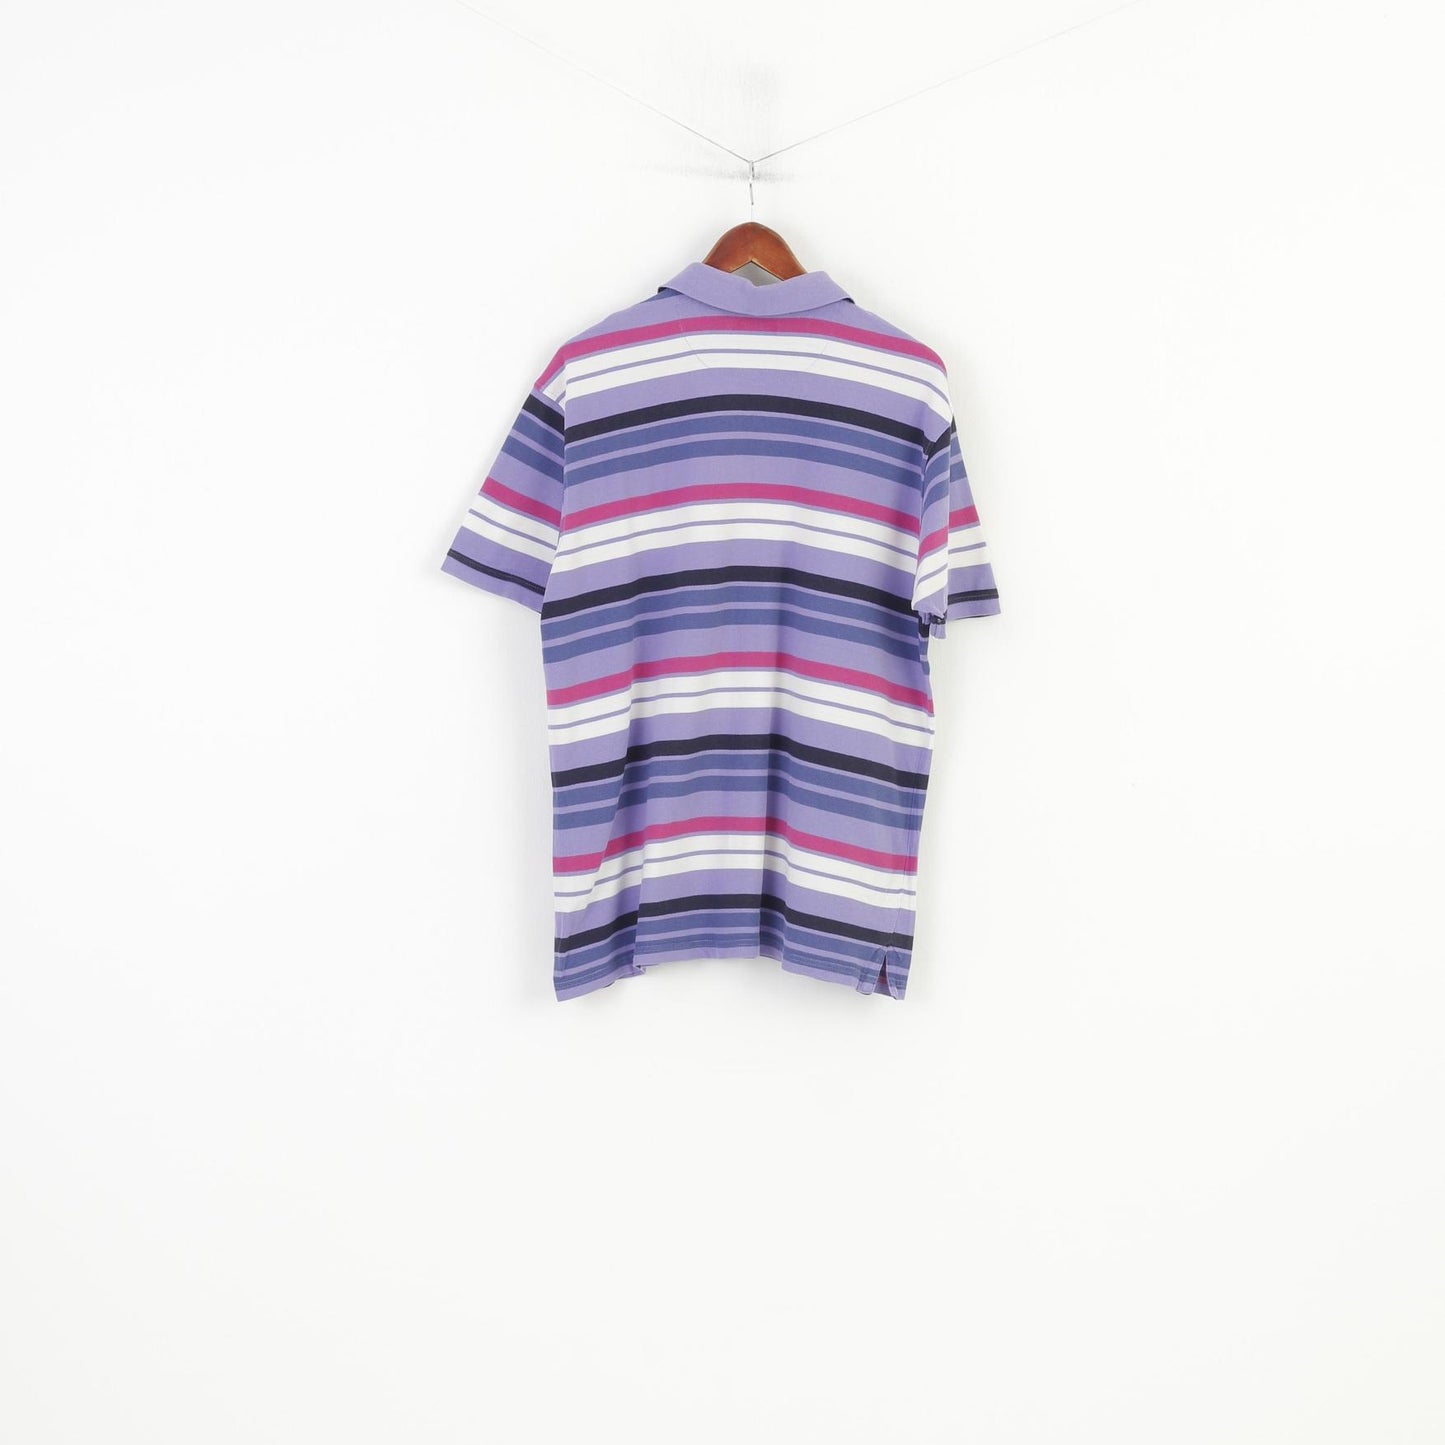 James Pringle Men XL Polo Shirt Purple Striped Cotton Classic Collar Short Sleeve Top